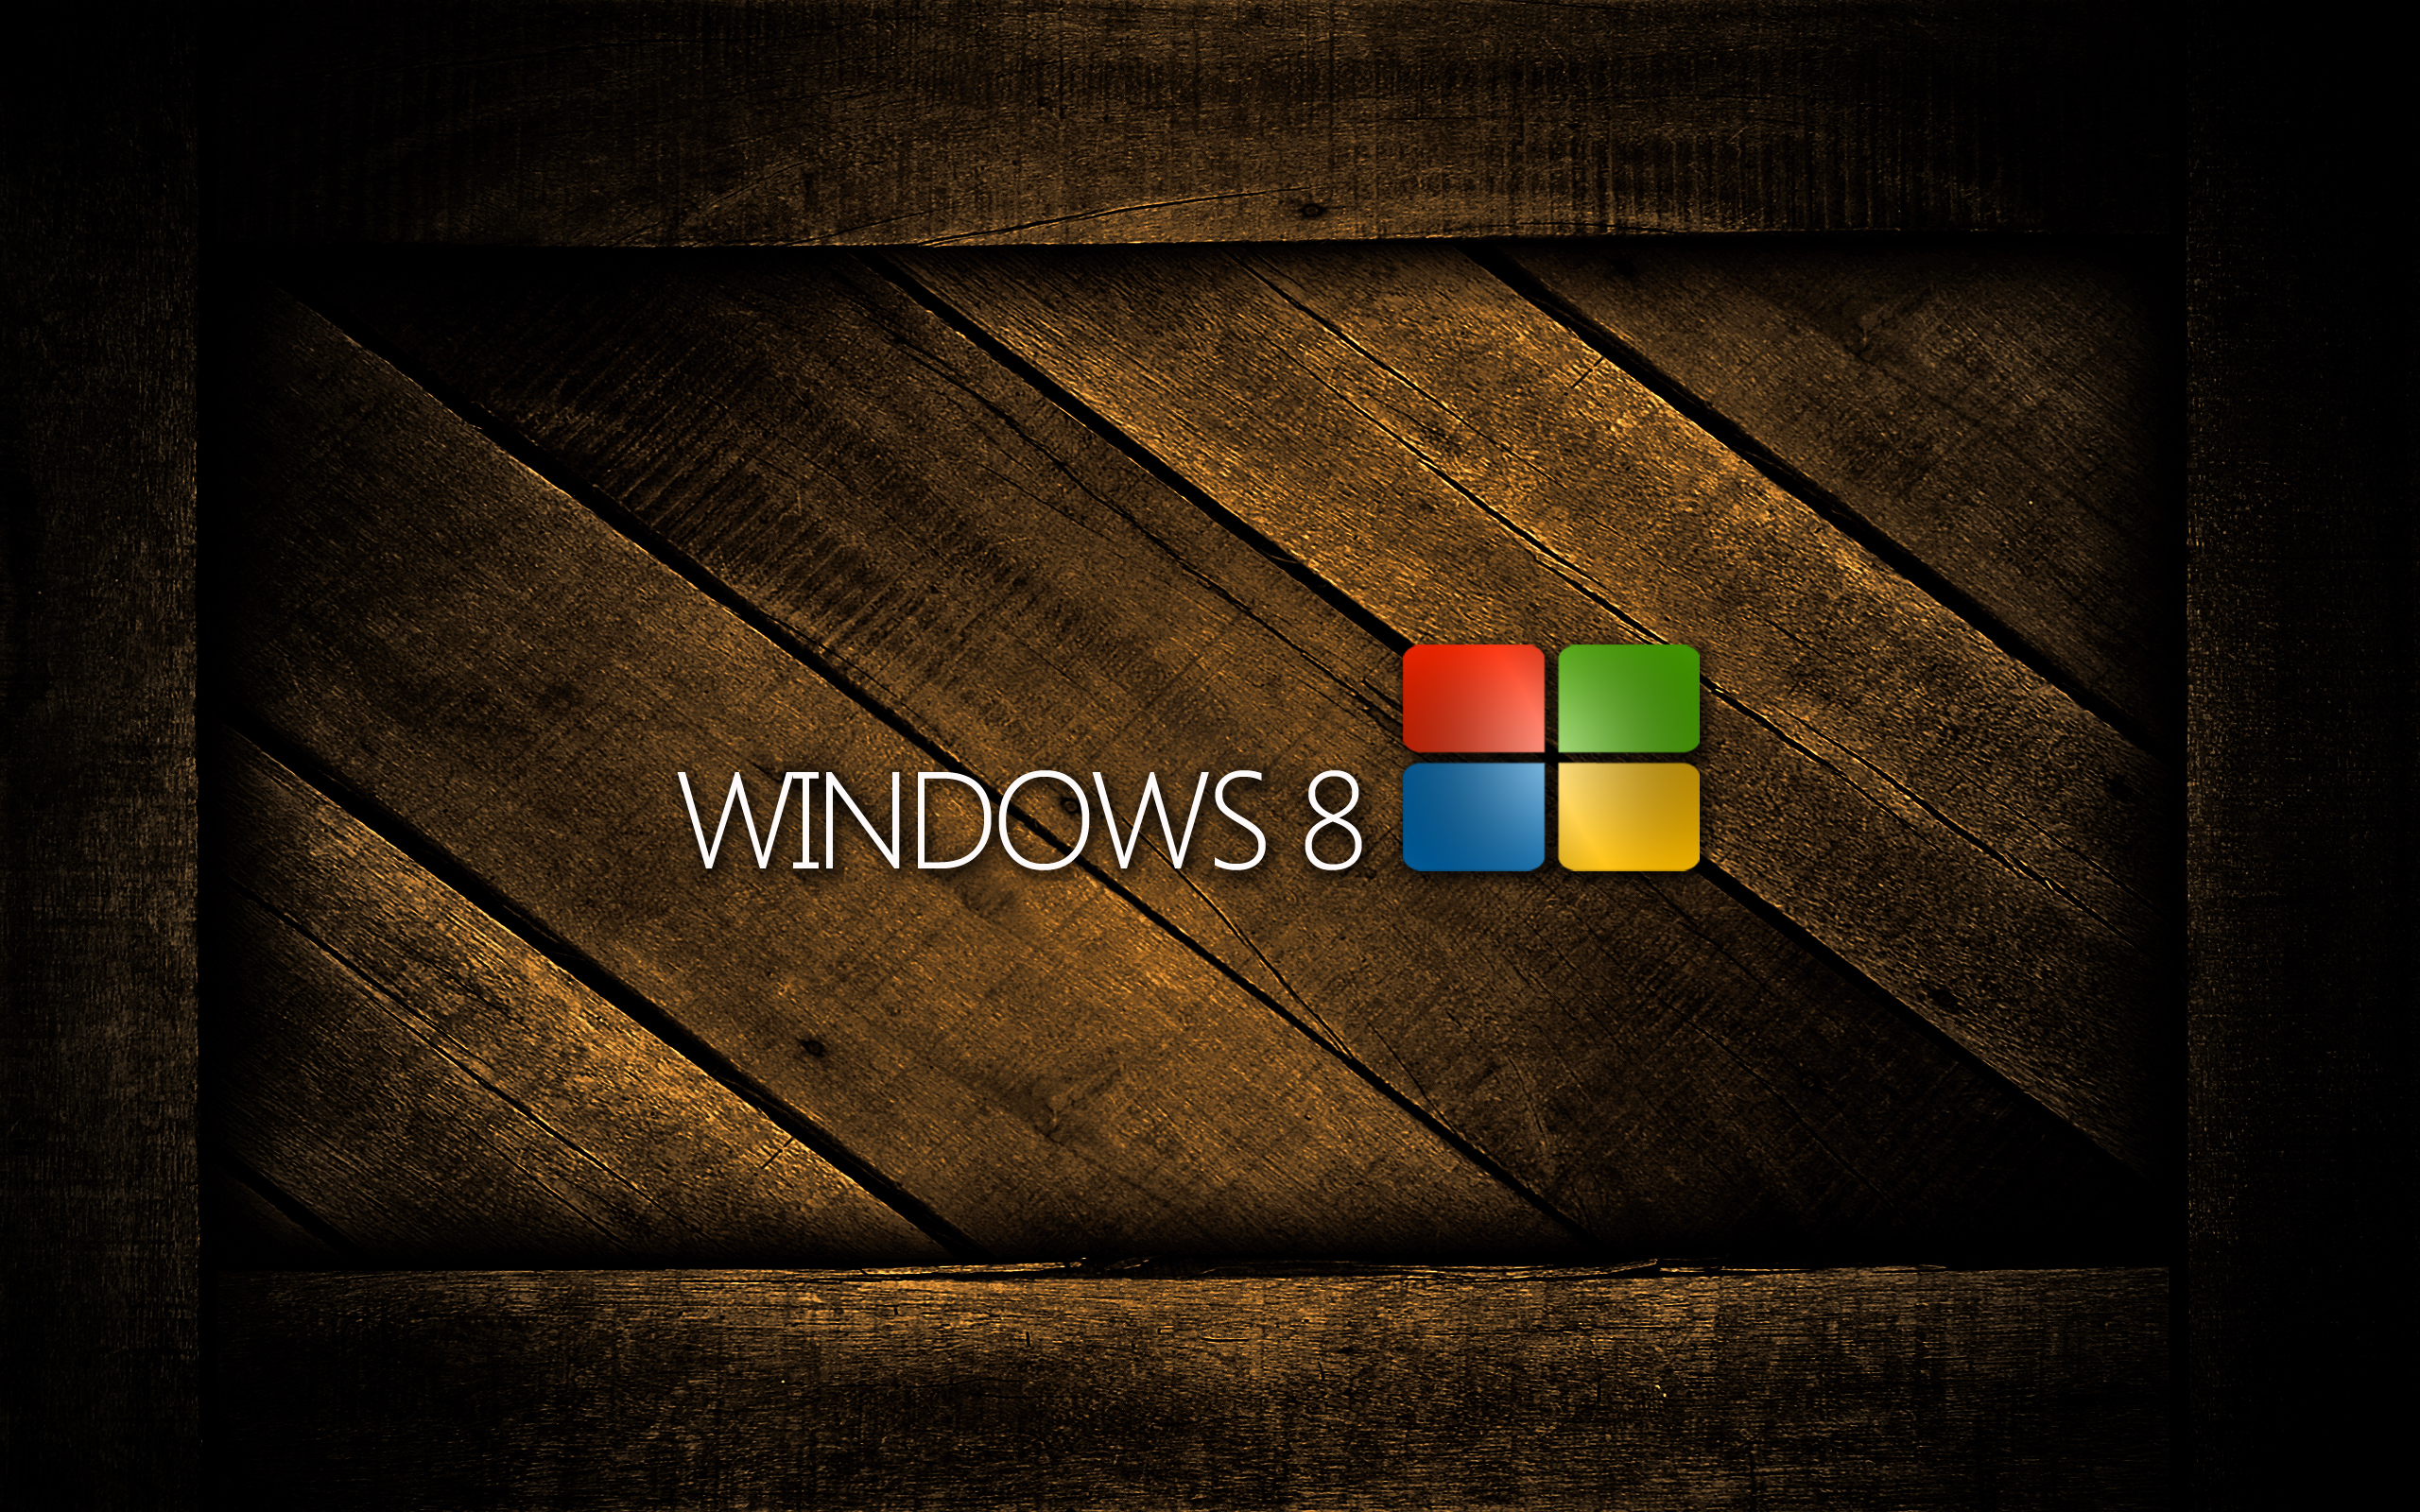 Windows 8 Wallpaper Art Design Wallpaper idwallpics.com